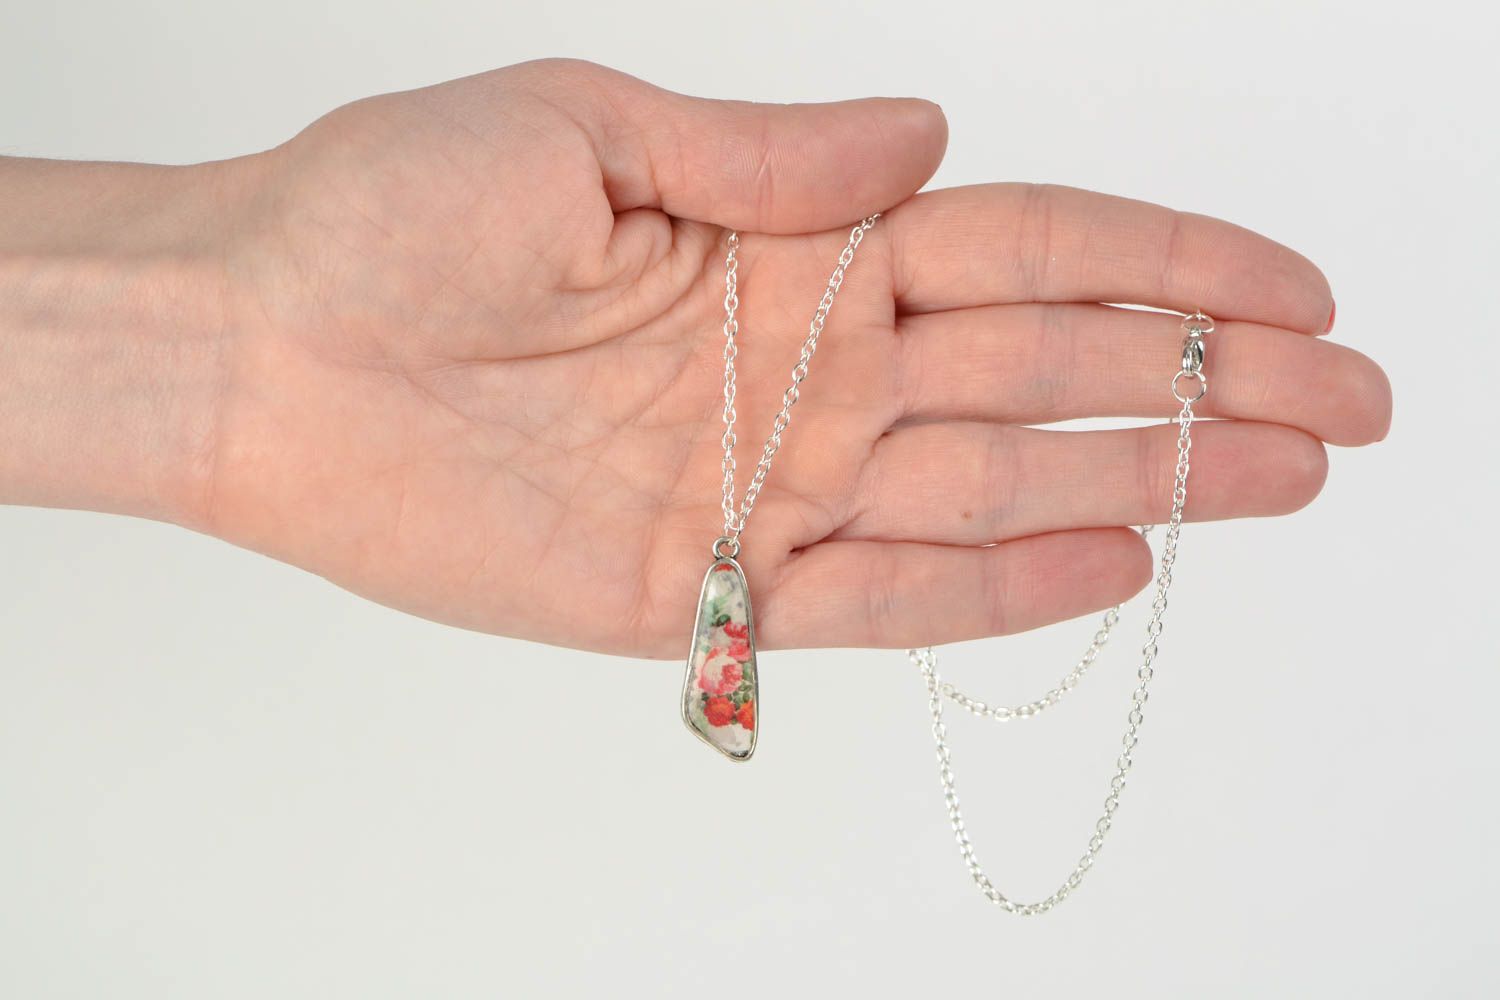 Handmade epoxy resin neck pendant with decoupage flowers for women photo 2